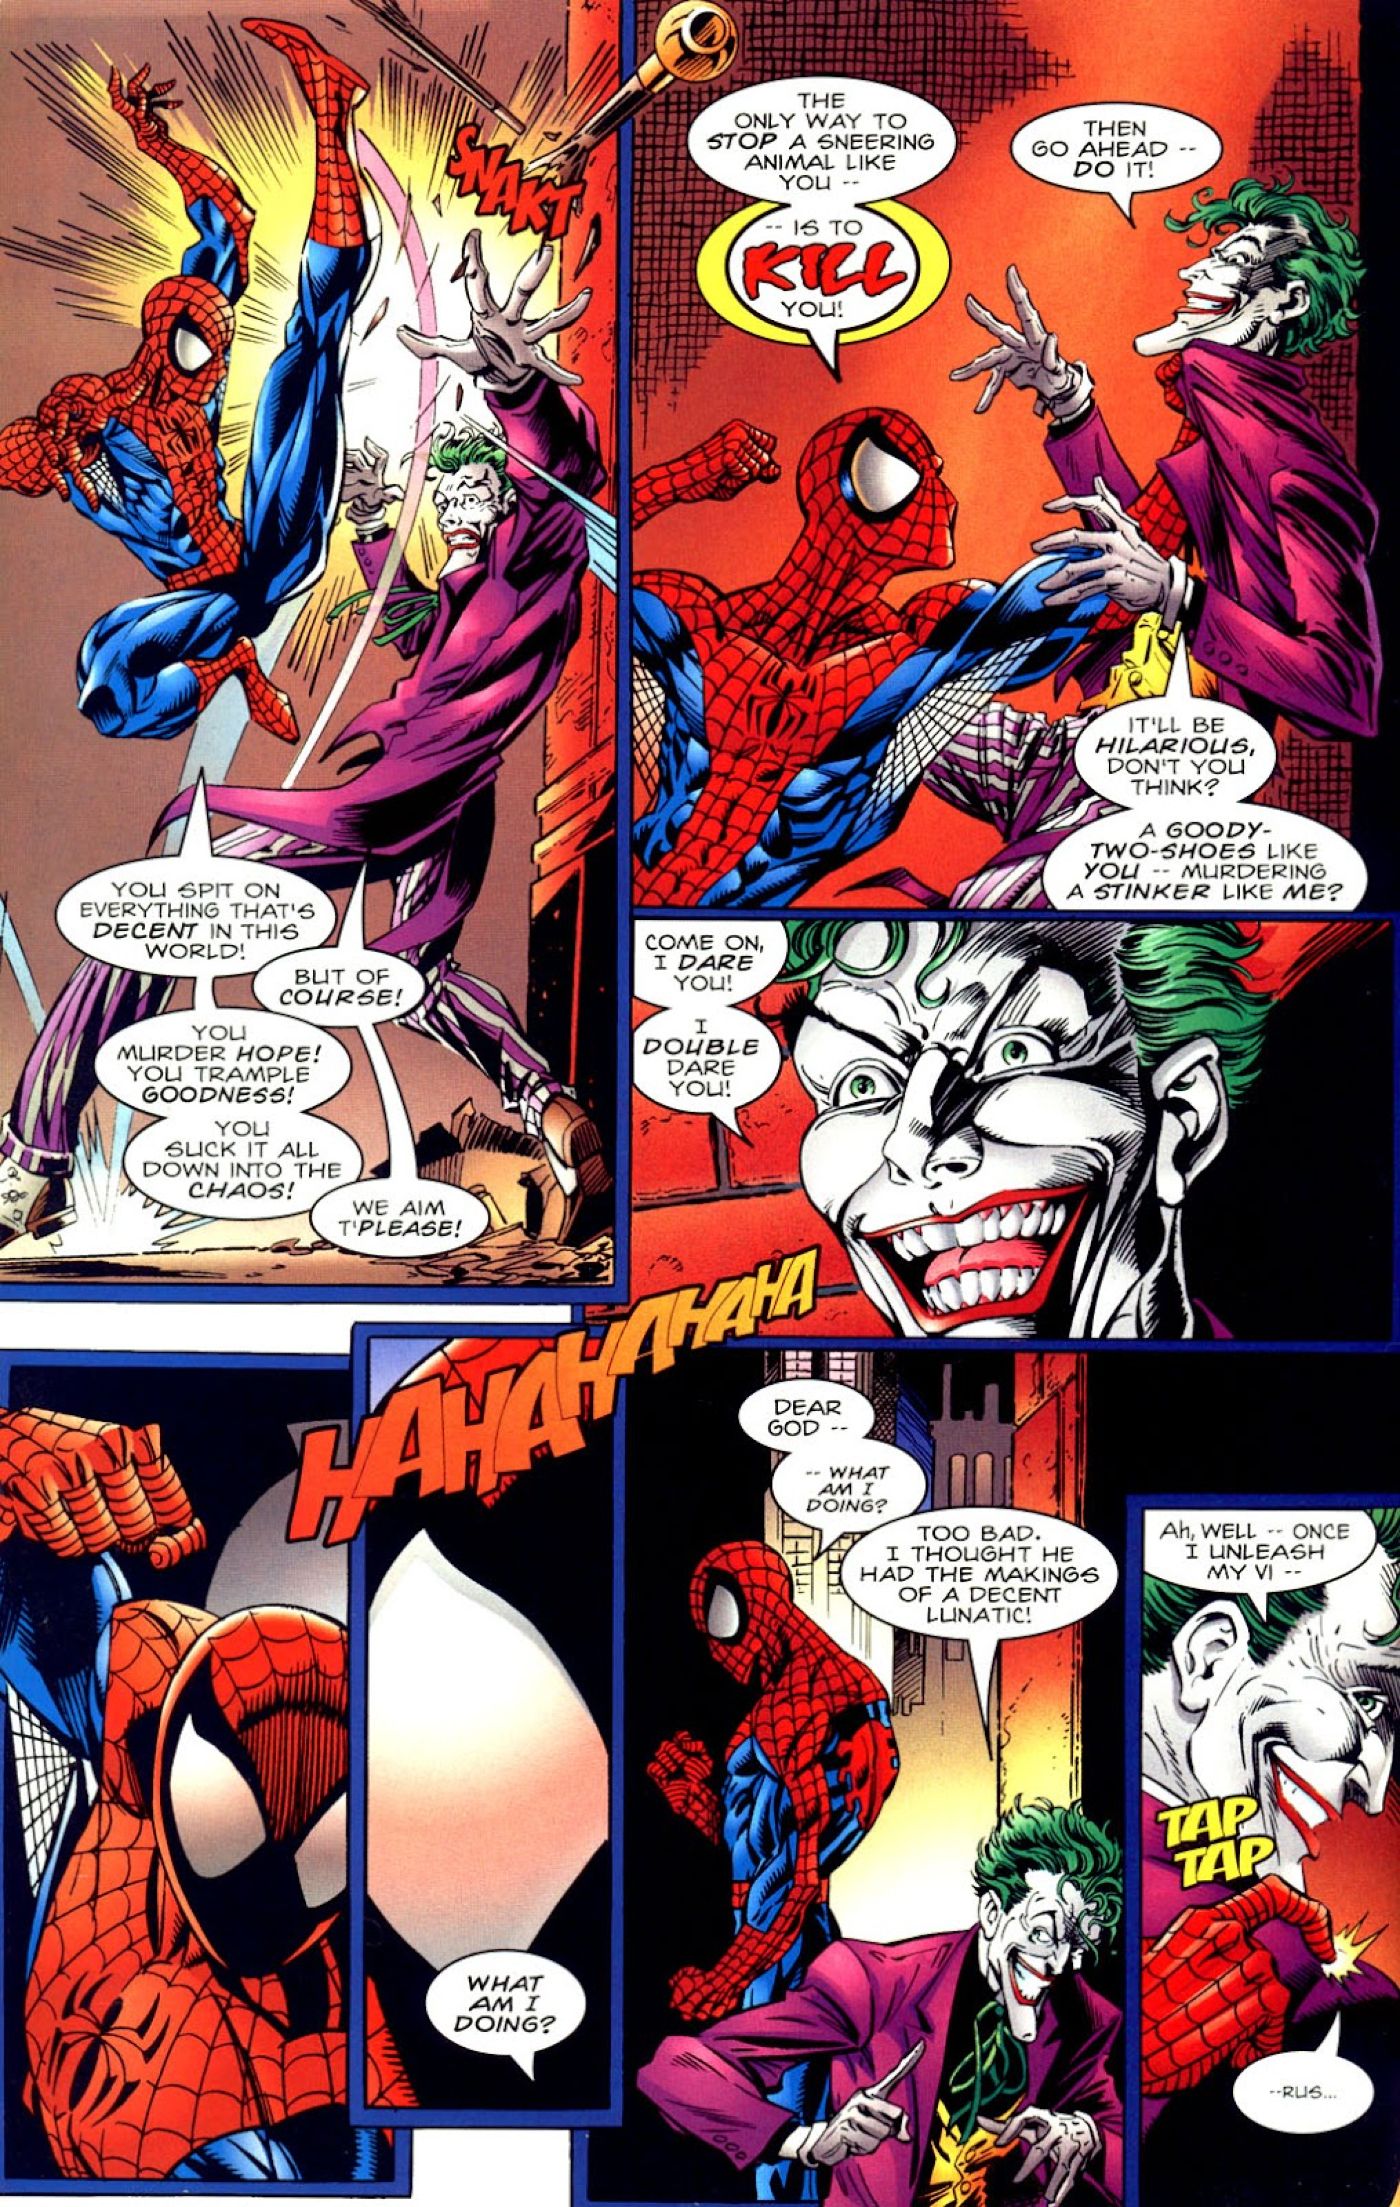 Spider-Man Nearly Kills the Joker